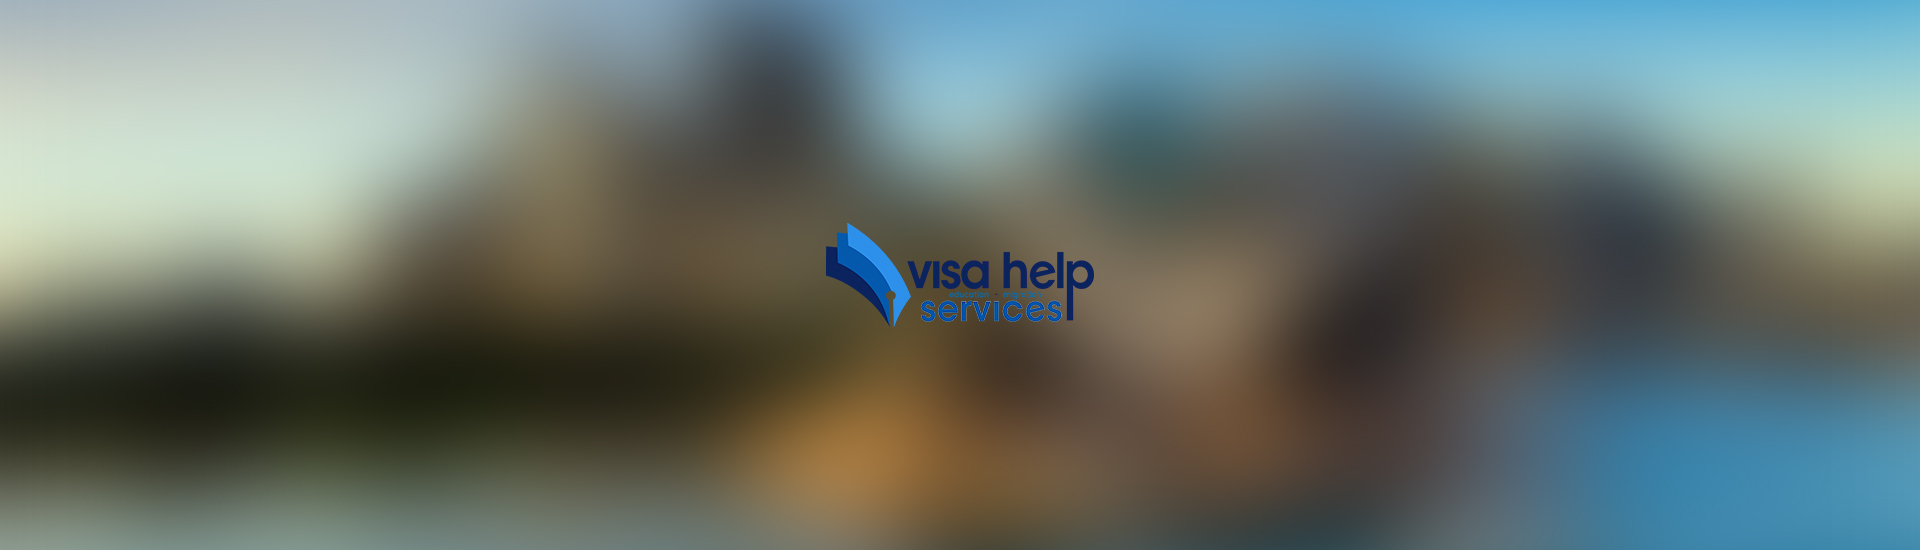 Visa Help Services